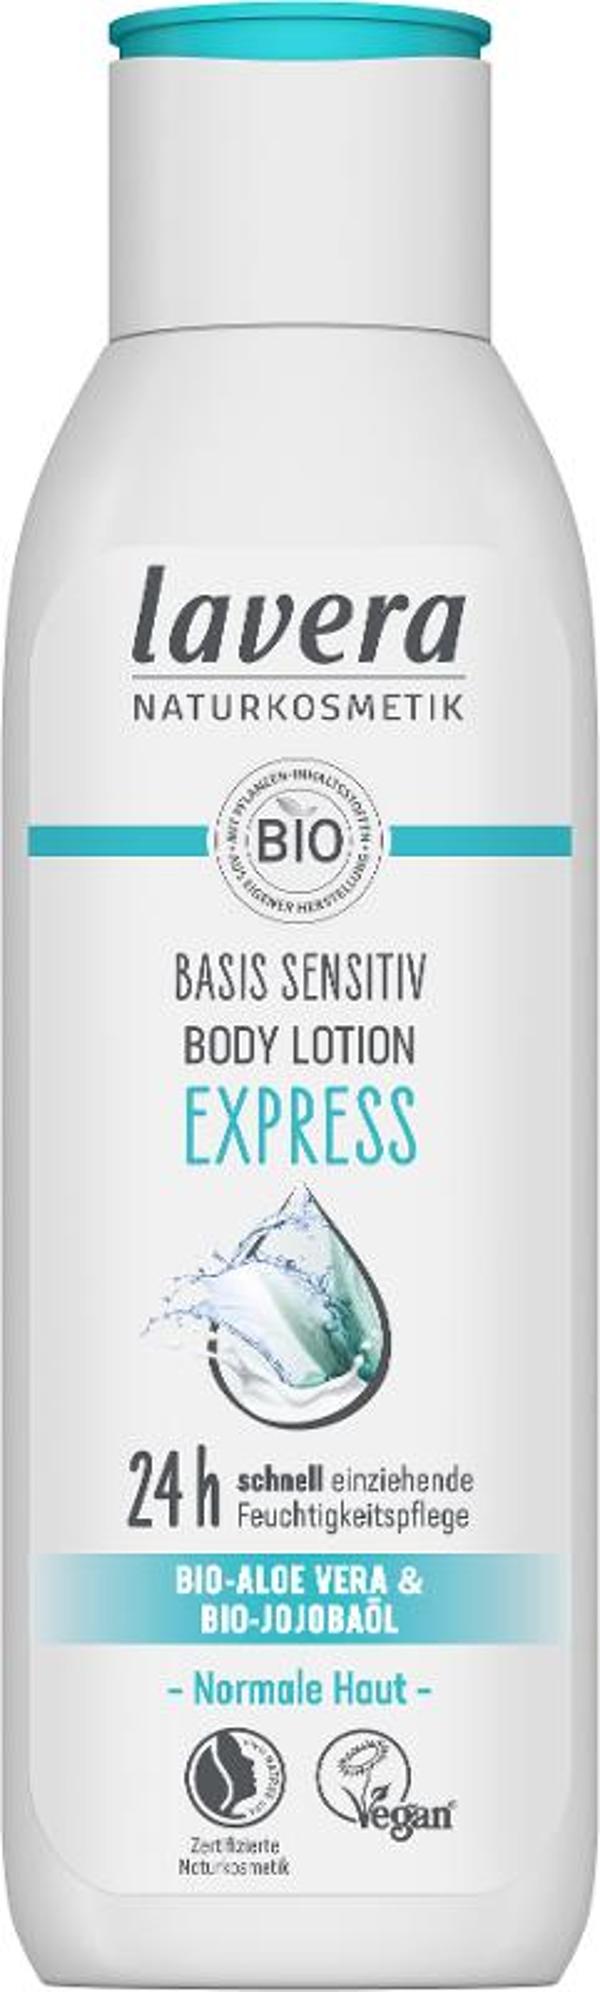 Produktfoto zu Basis Sensitiv Bodylotion Express - 250ml